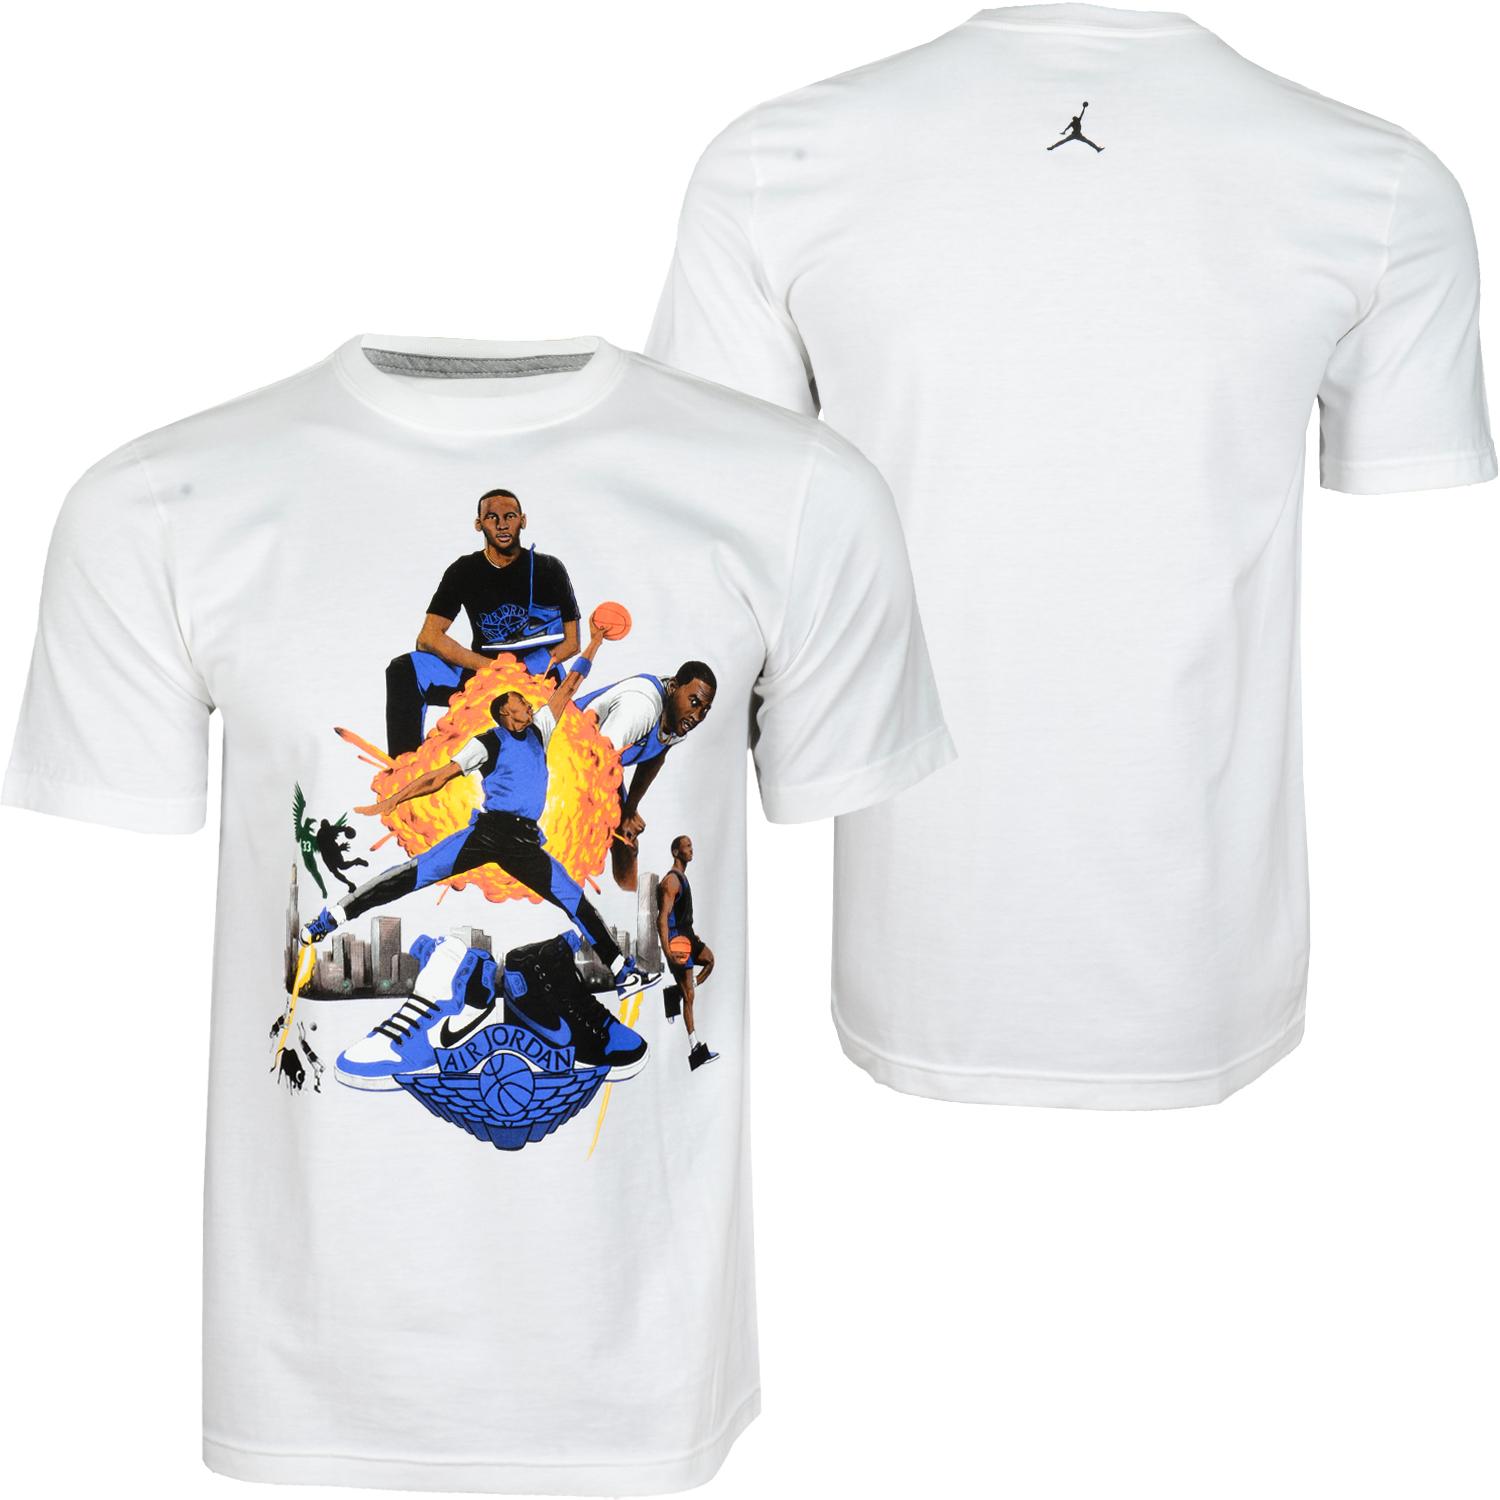 Foto Nike Air Jordan 1 Picturesque T-shirt Blanco